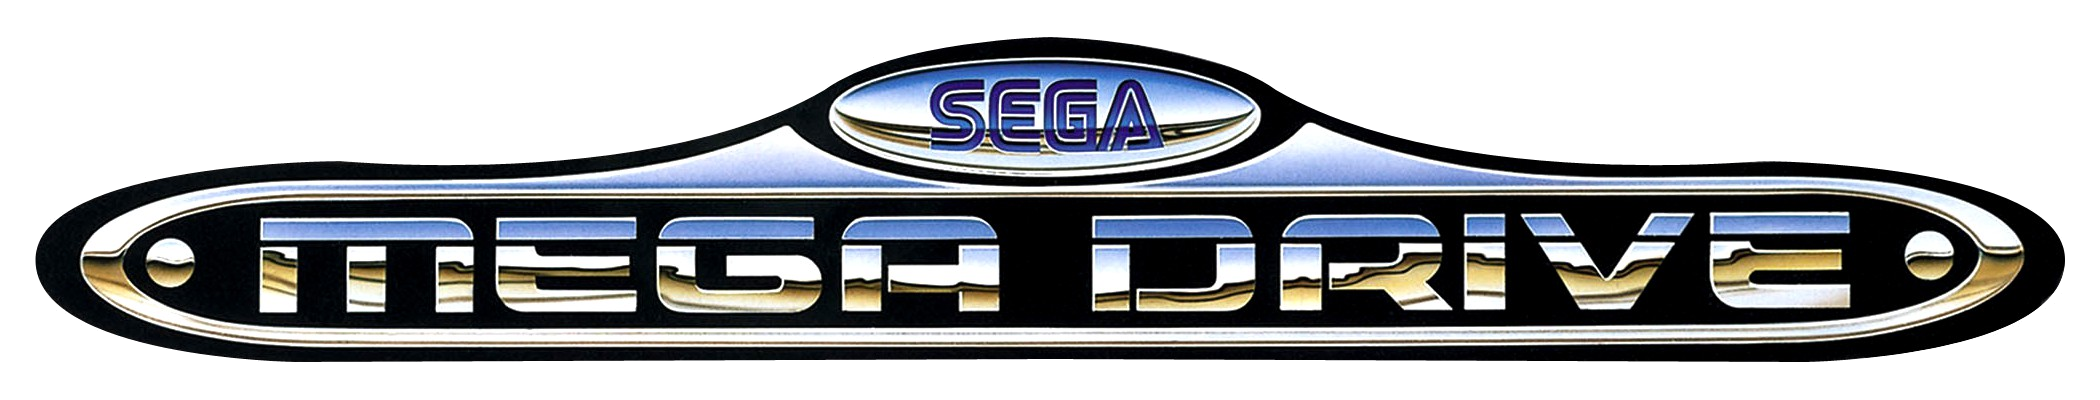 Image result for sega mega drive logo